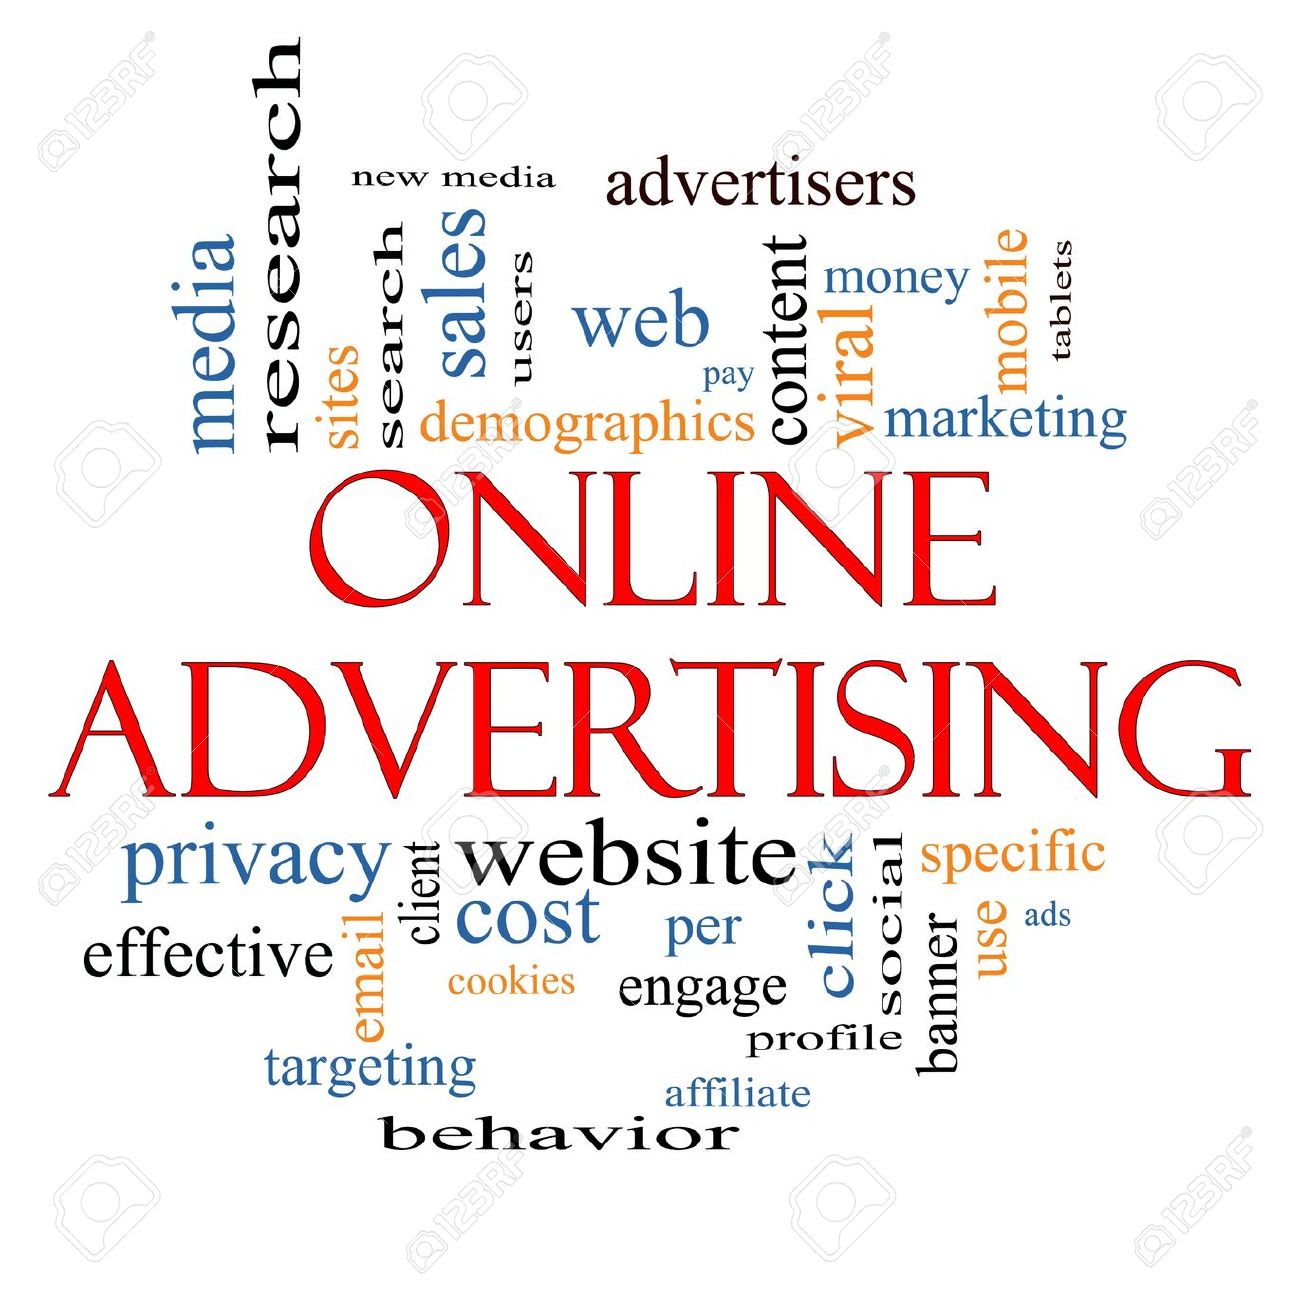 online_advertising_benefits.jpg